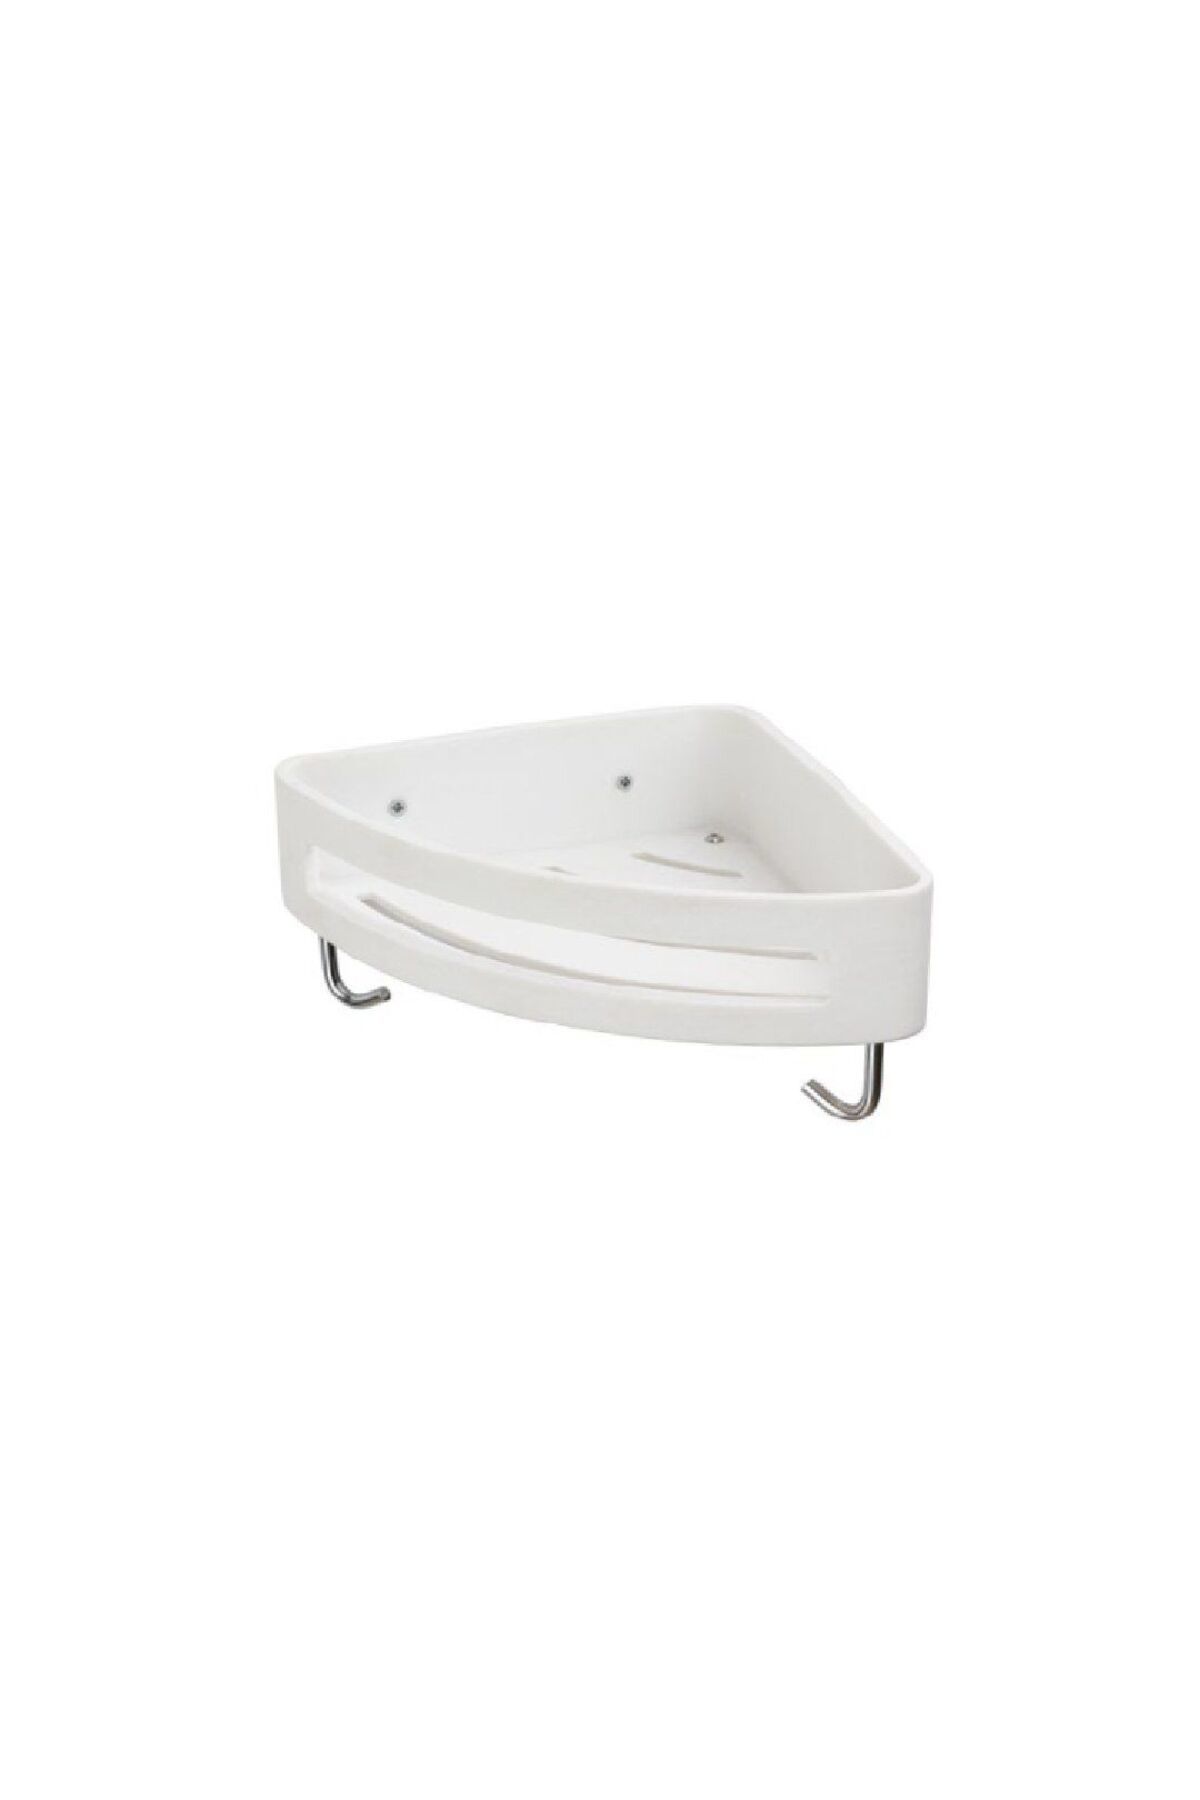 Banyo Duş Raf Sistemi Beyaz/Krom Renk 110X197X287 mm